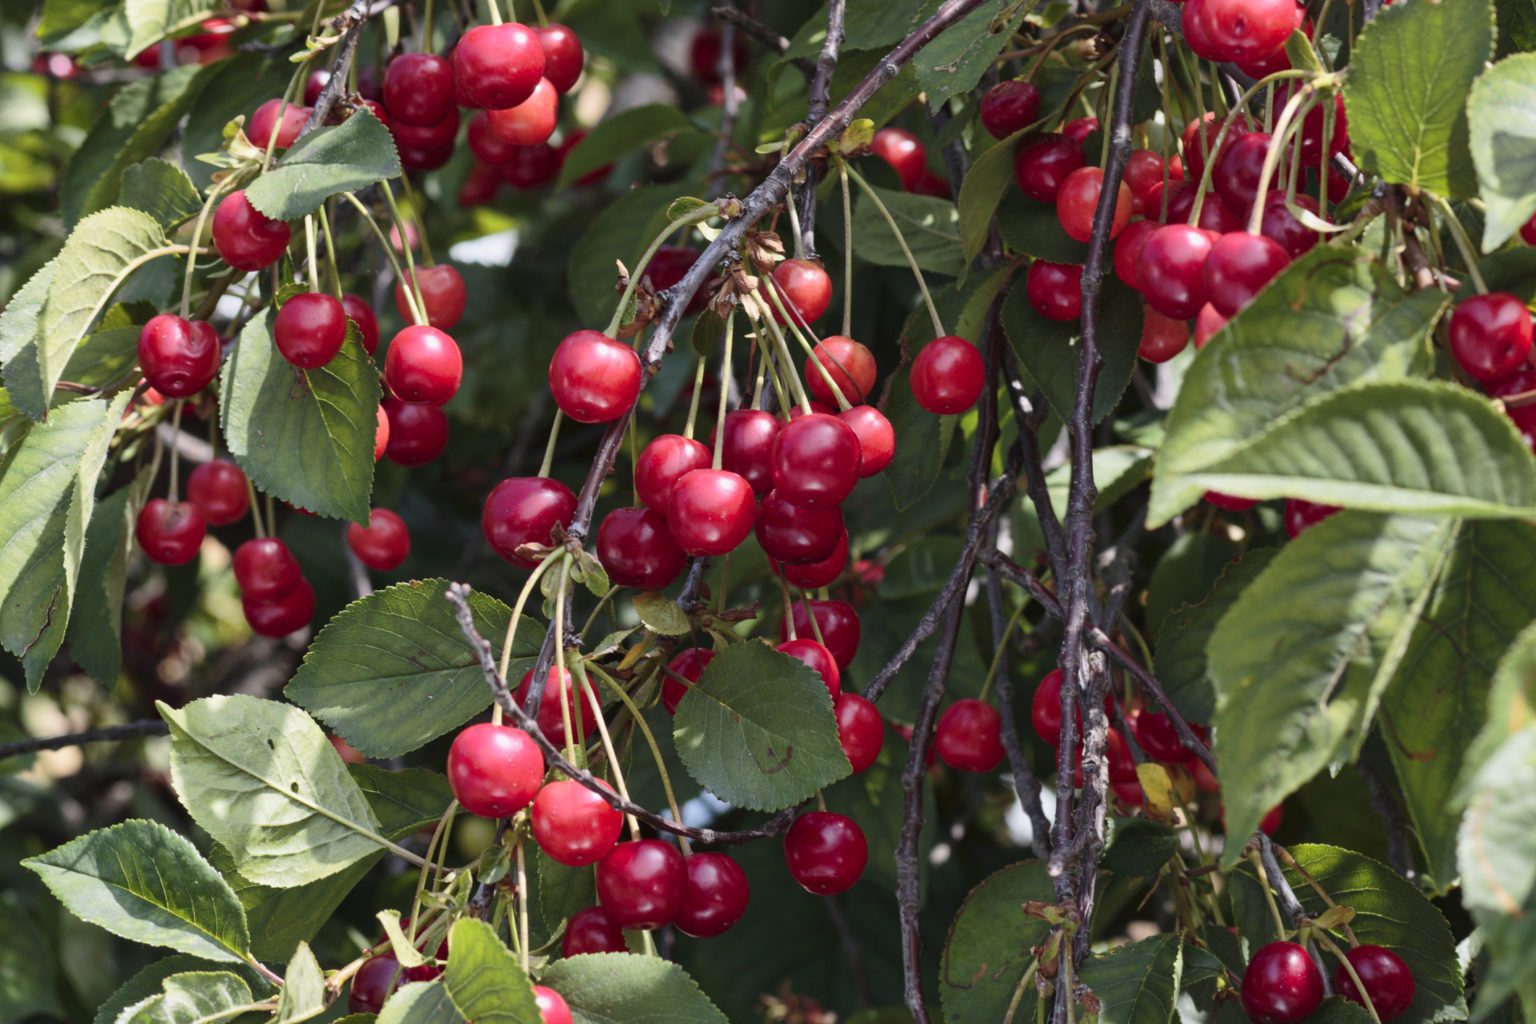 Cherry season opens